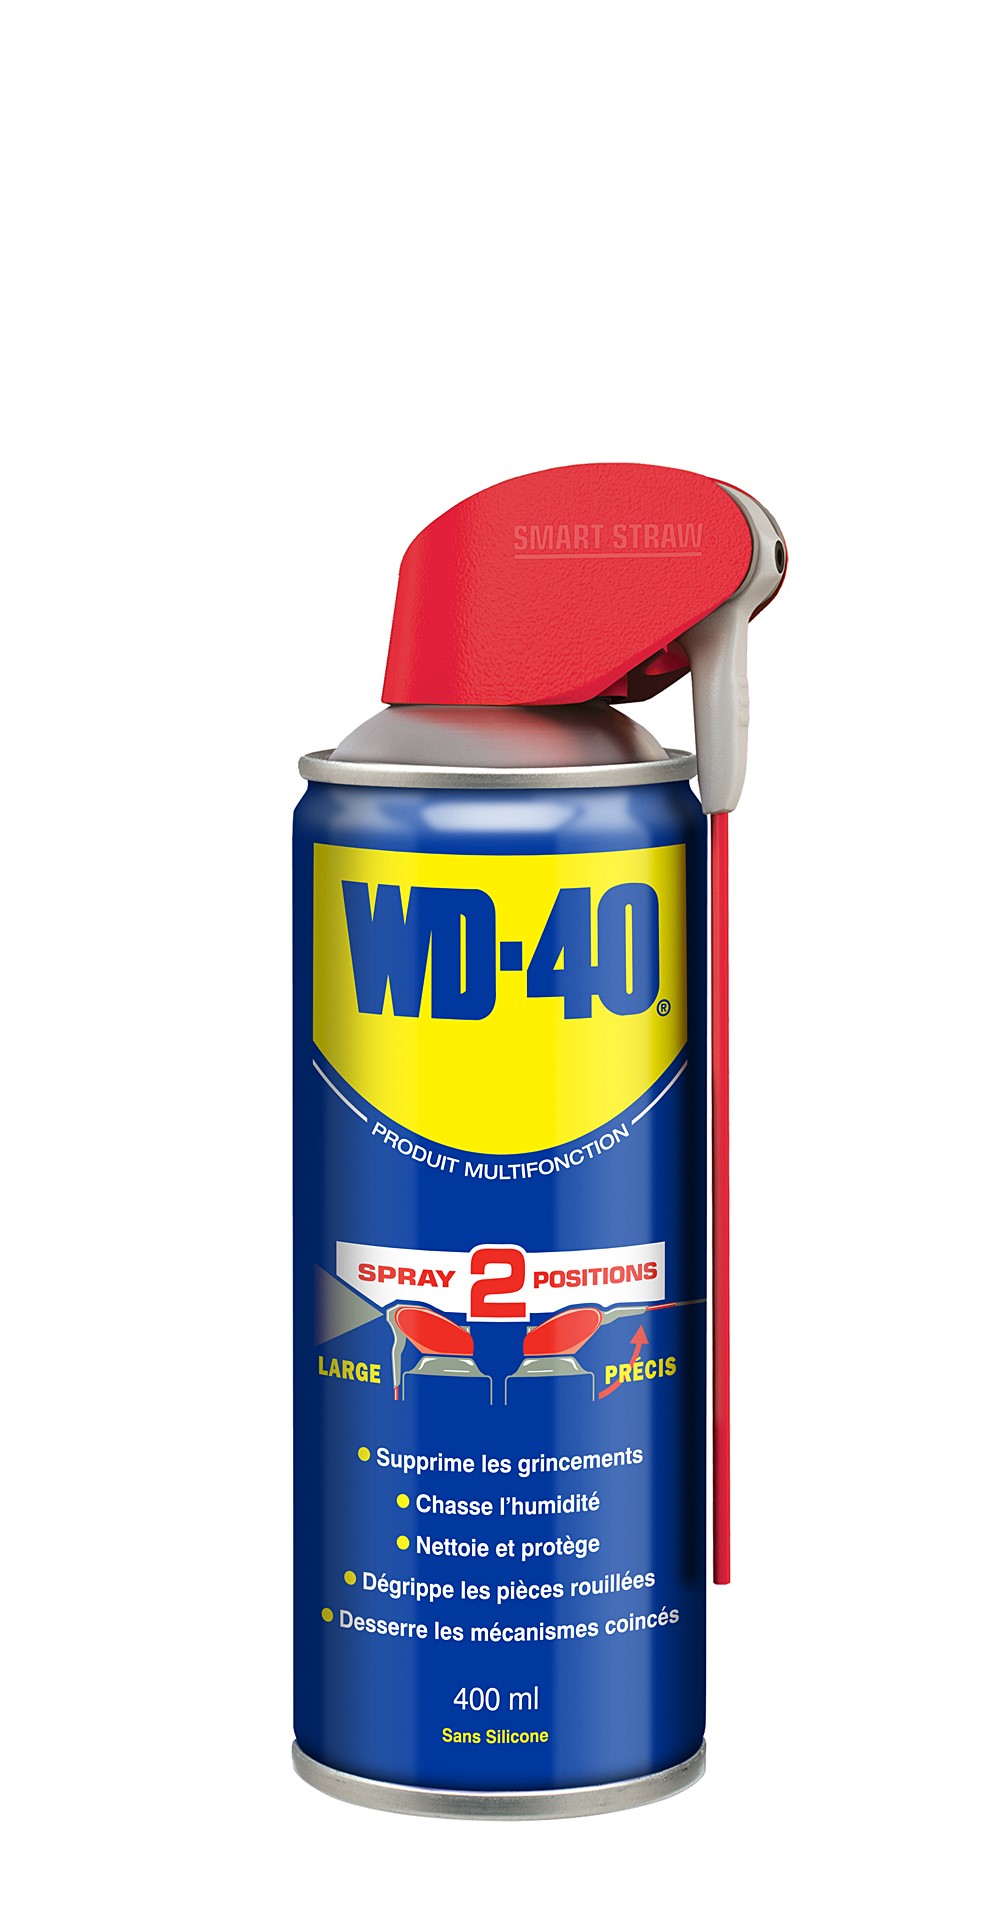 WD-40 Produit Multifonction 400ml Spray Double Position